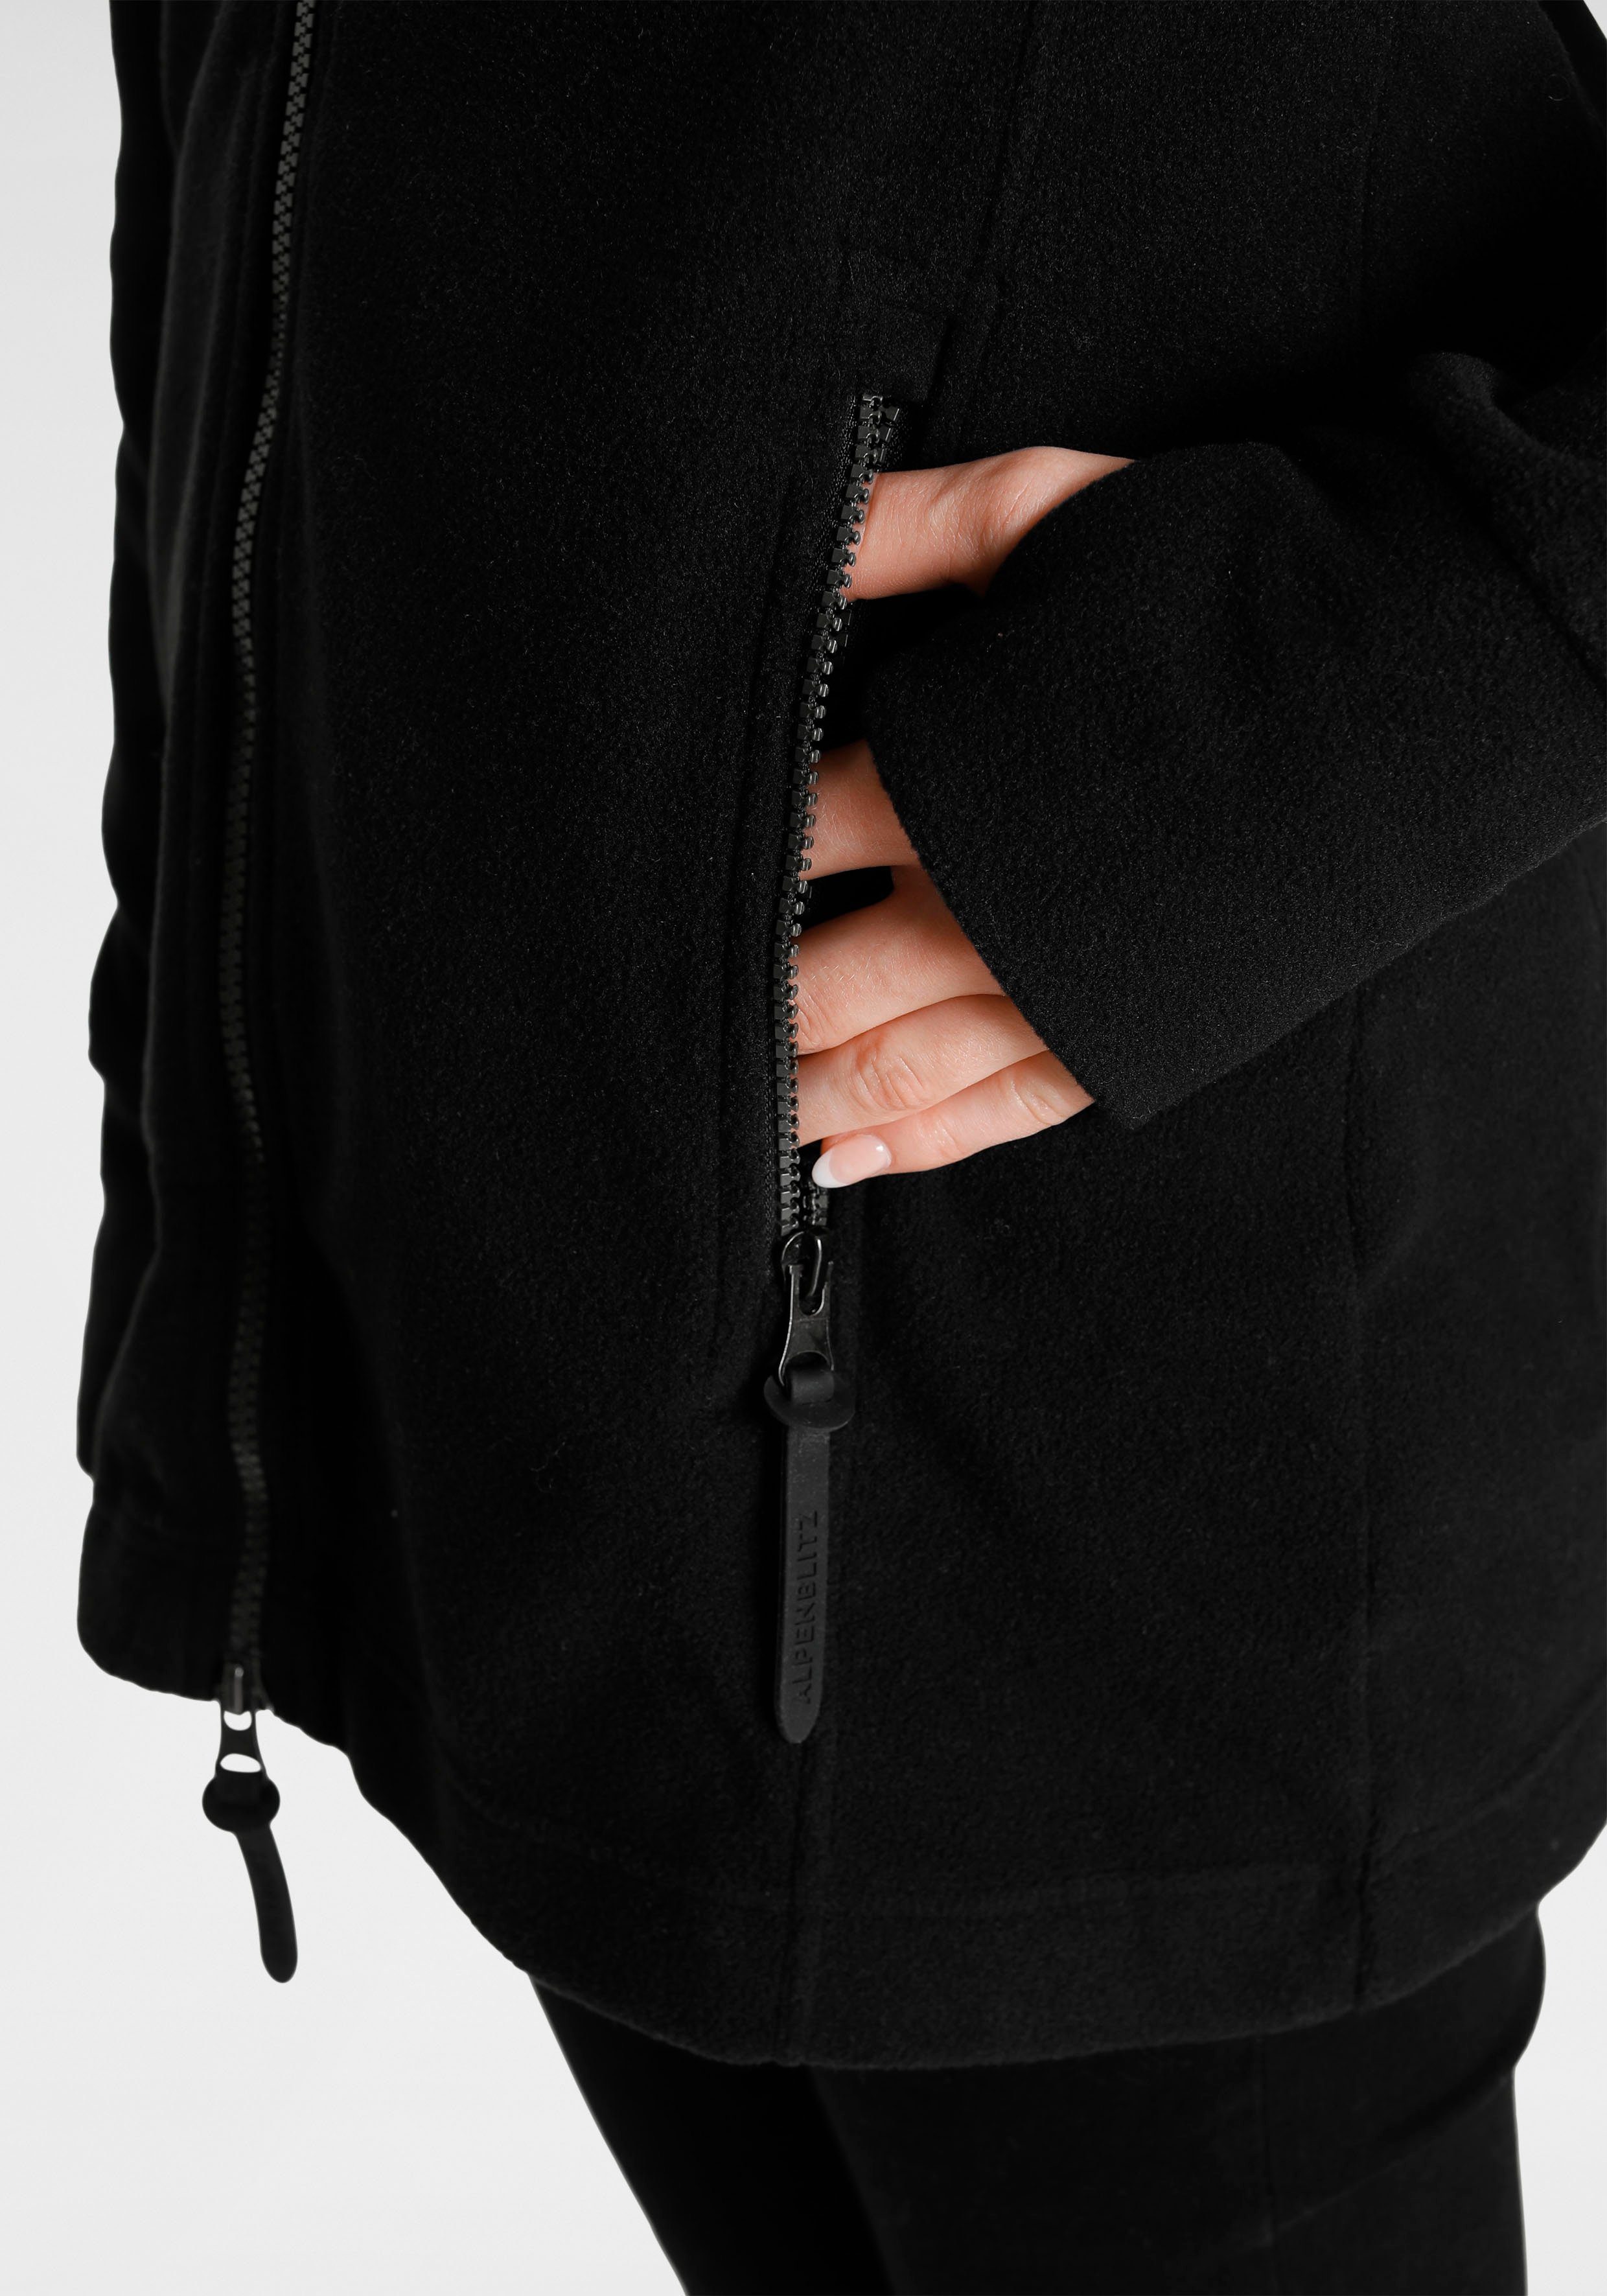 ALPENBLITZ Kapuzensweatjacke mit 2-Wege-Reißverschluss und Material Kapuze aus Fleece abnehmbarer schwarz Teiji